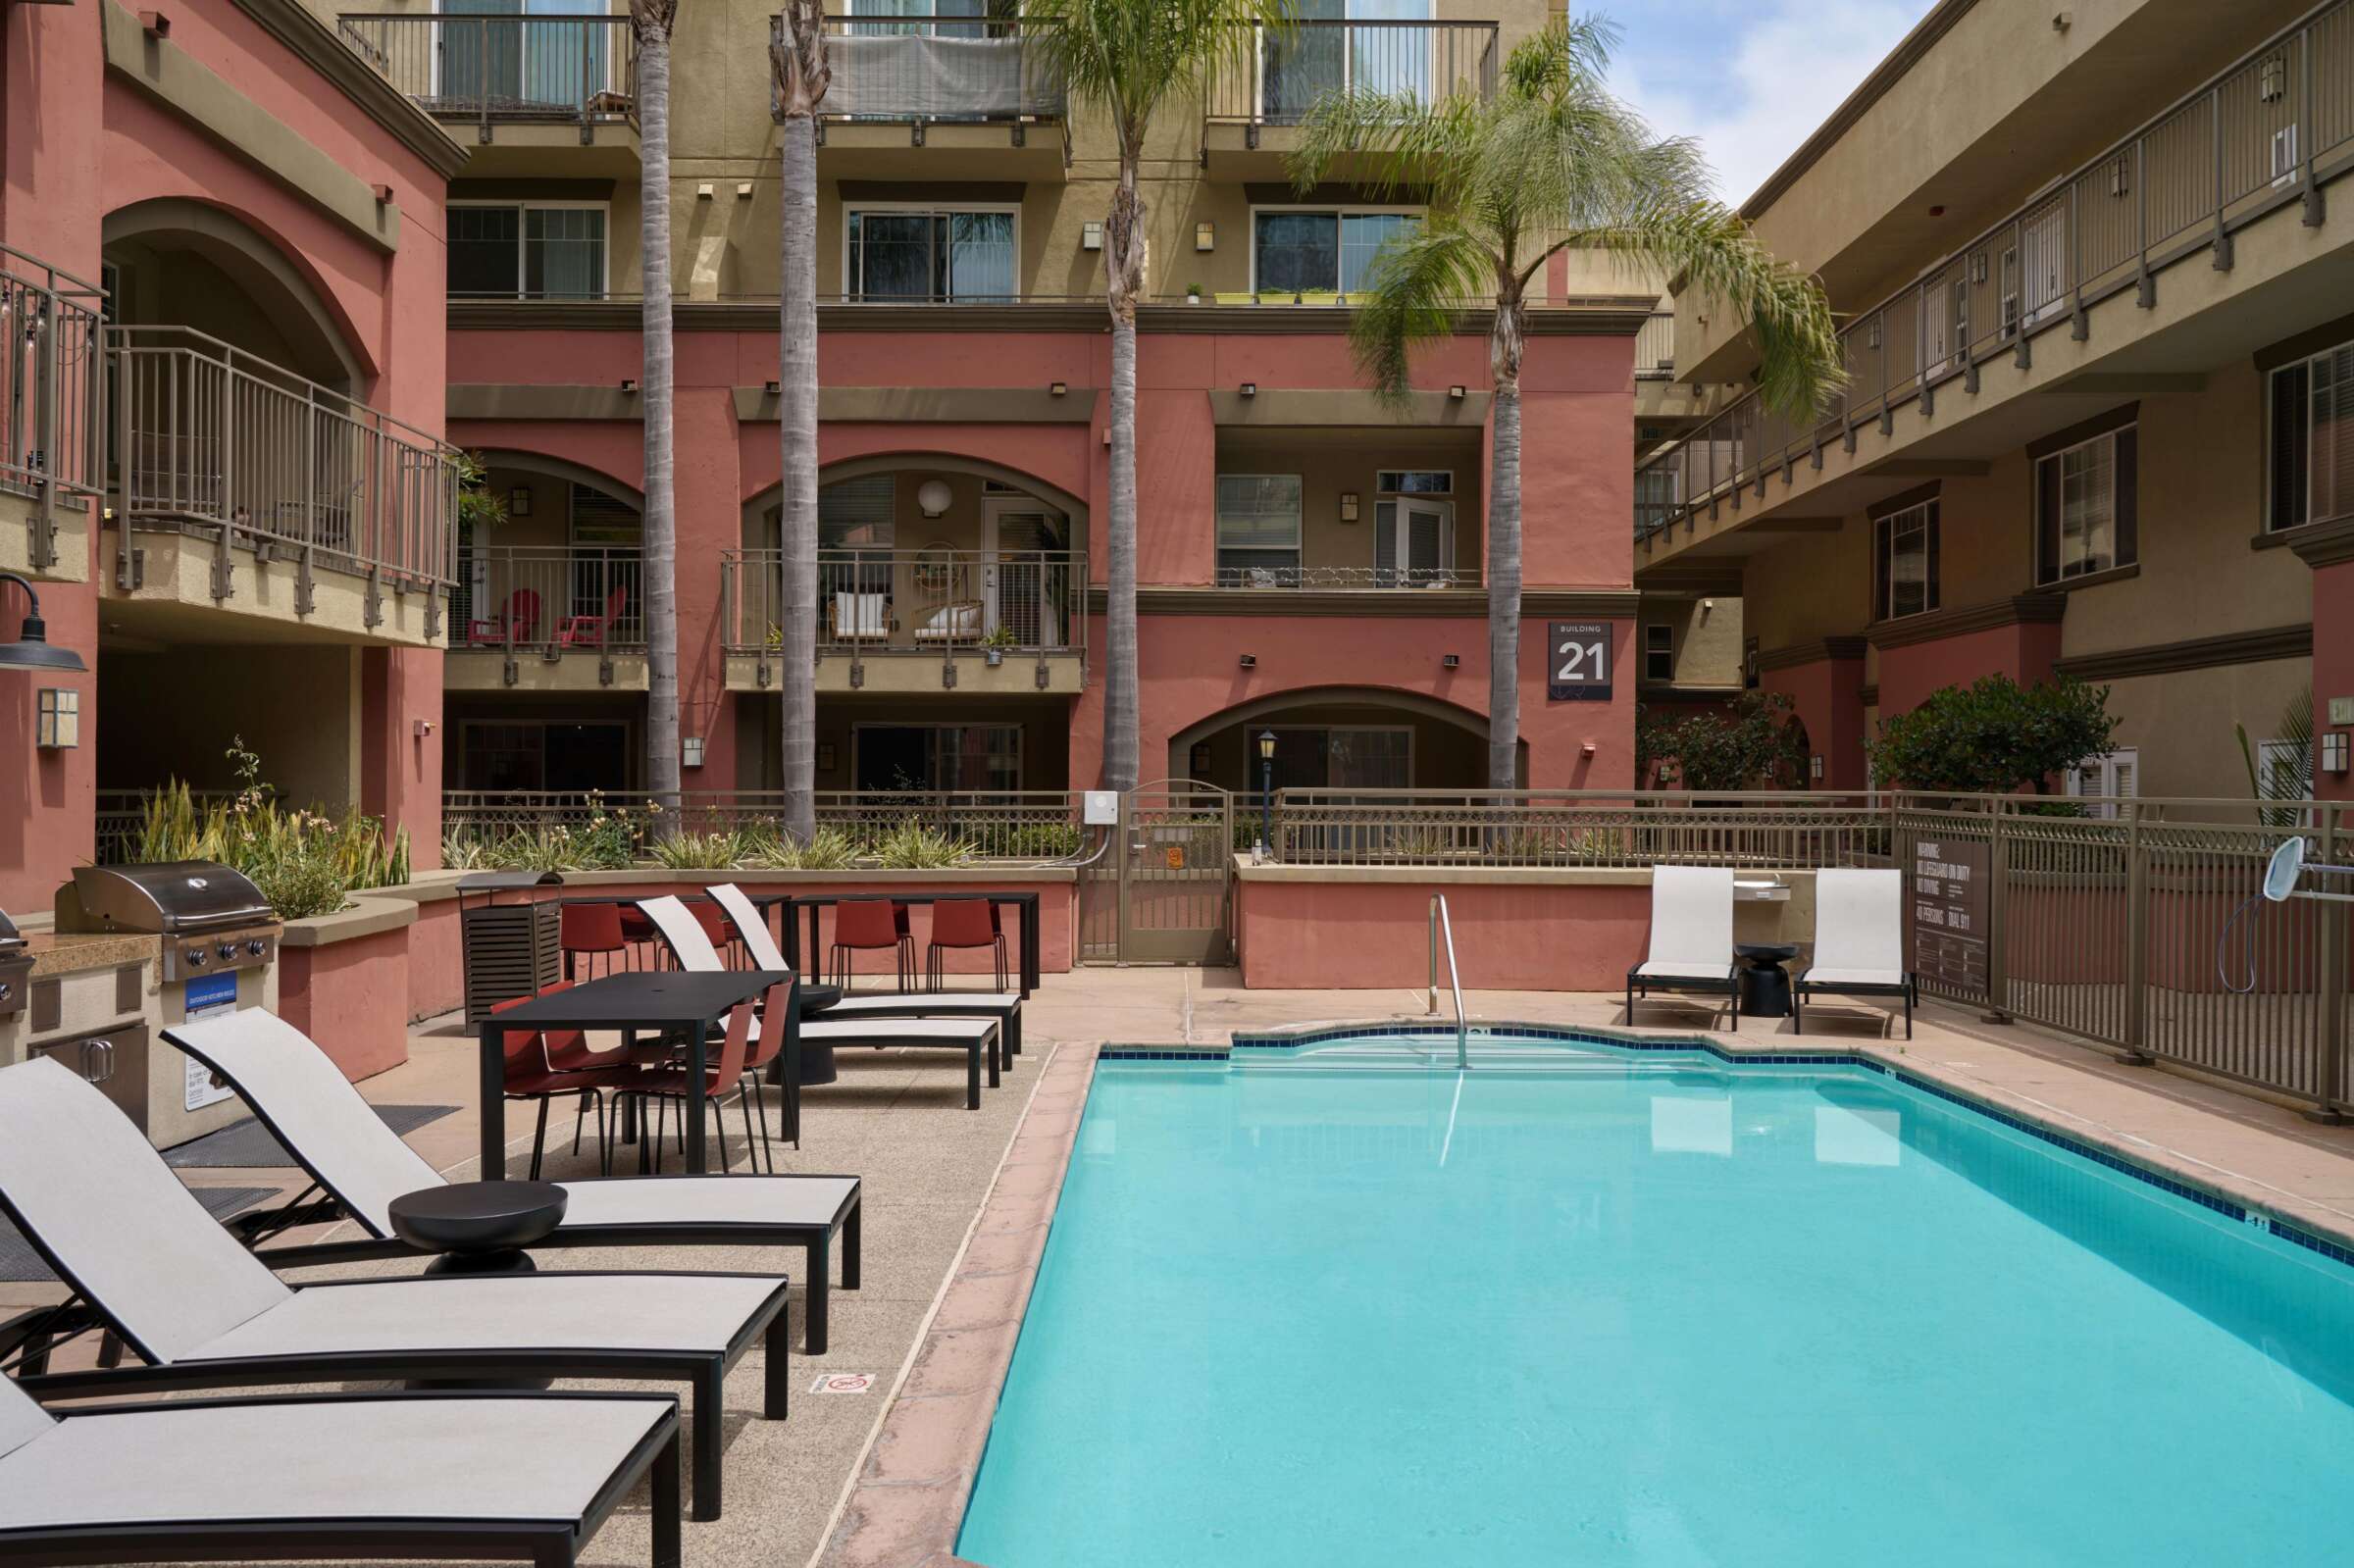 Gema apartments pool